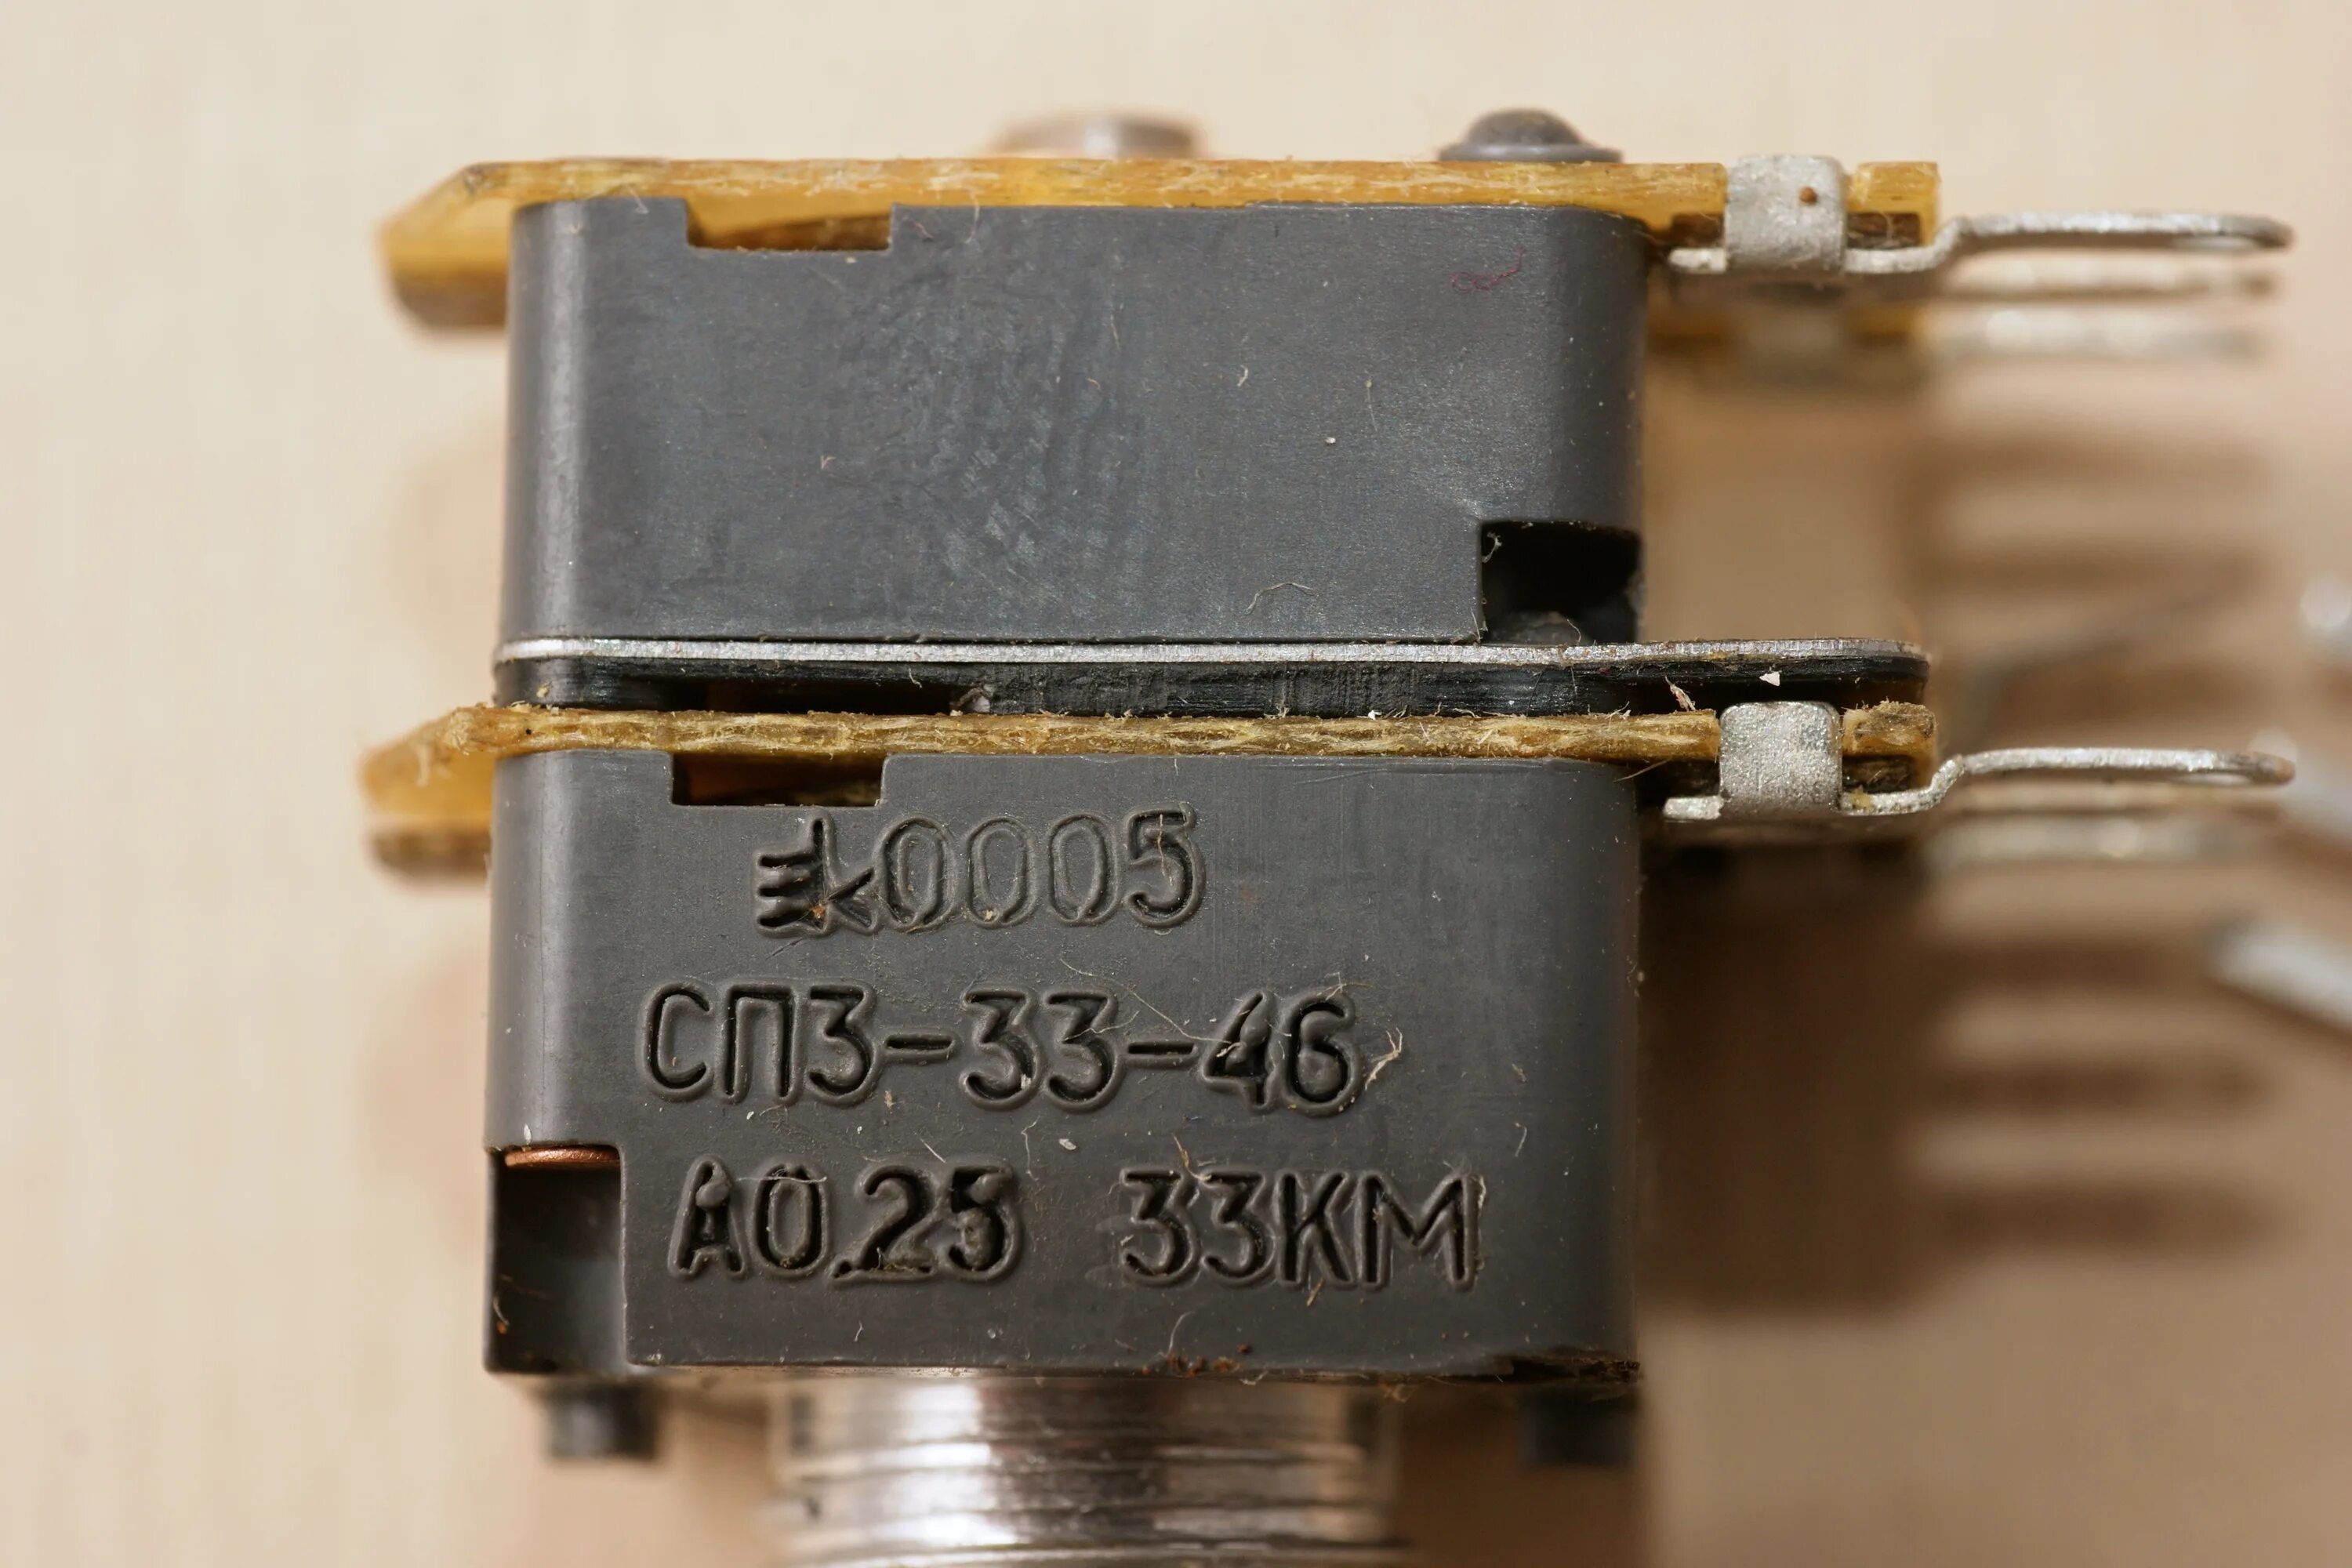 Резистор сп3-33-46. Потенциометр сп3-33 маркировка. Сп3-3вм. Потенциометр сп3-33 25 мм. Резистор сп 3